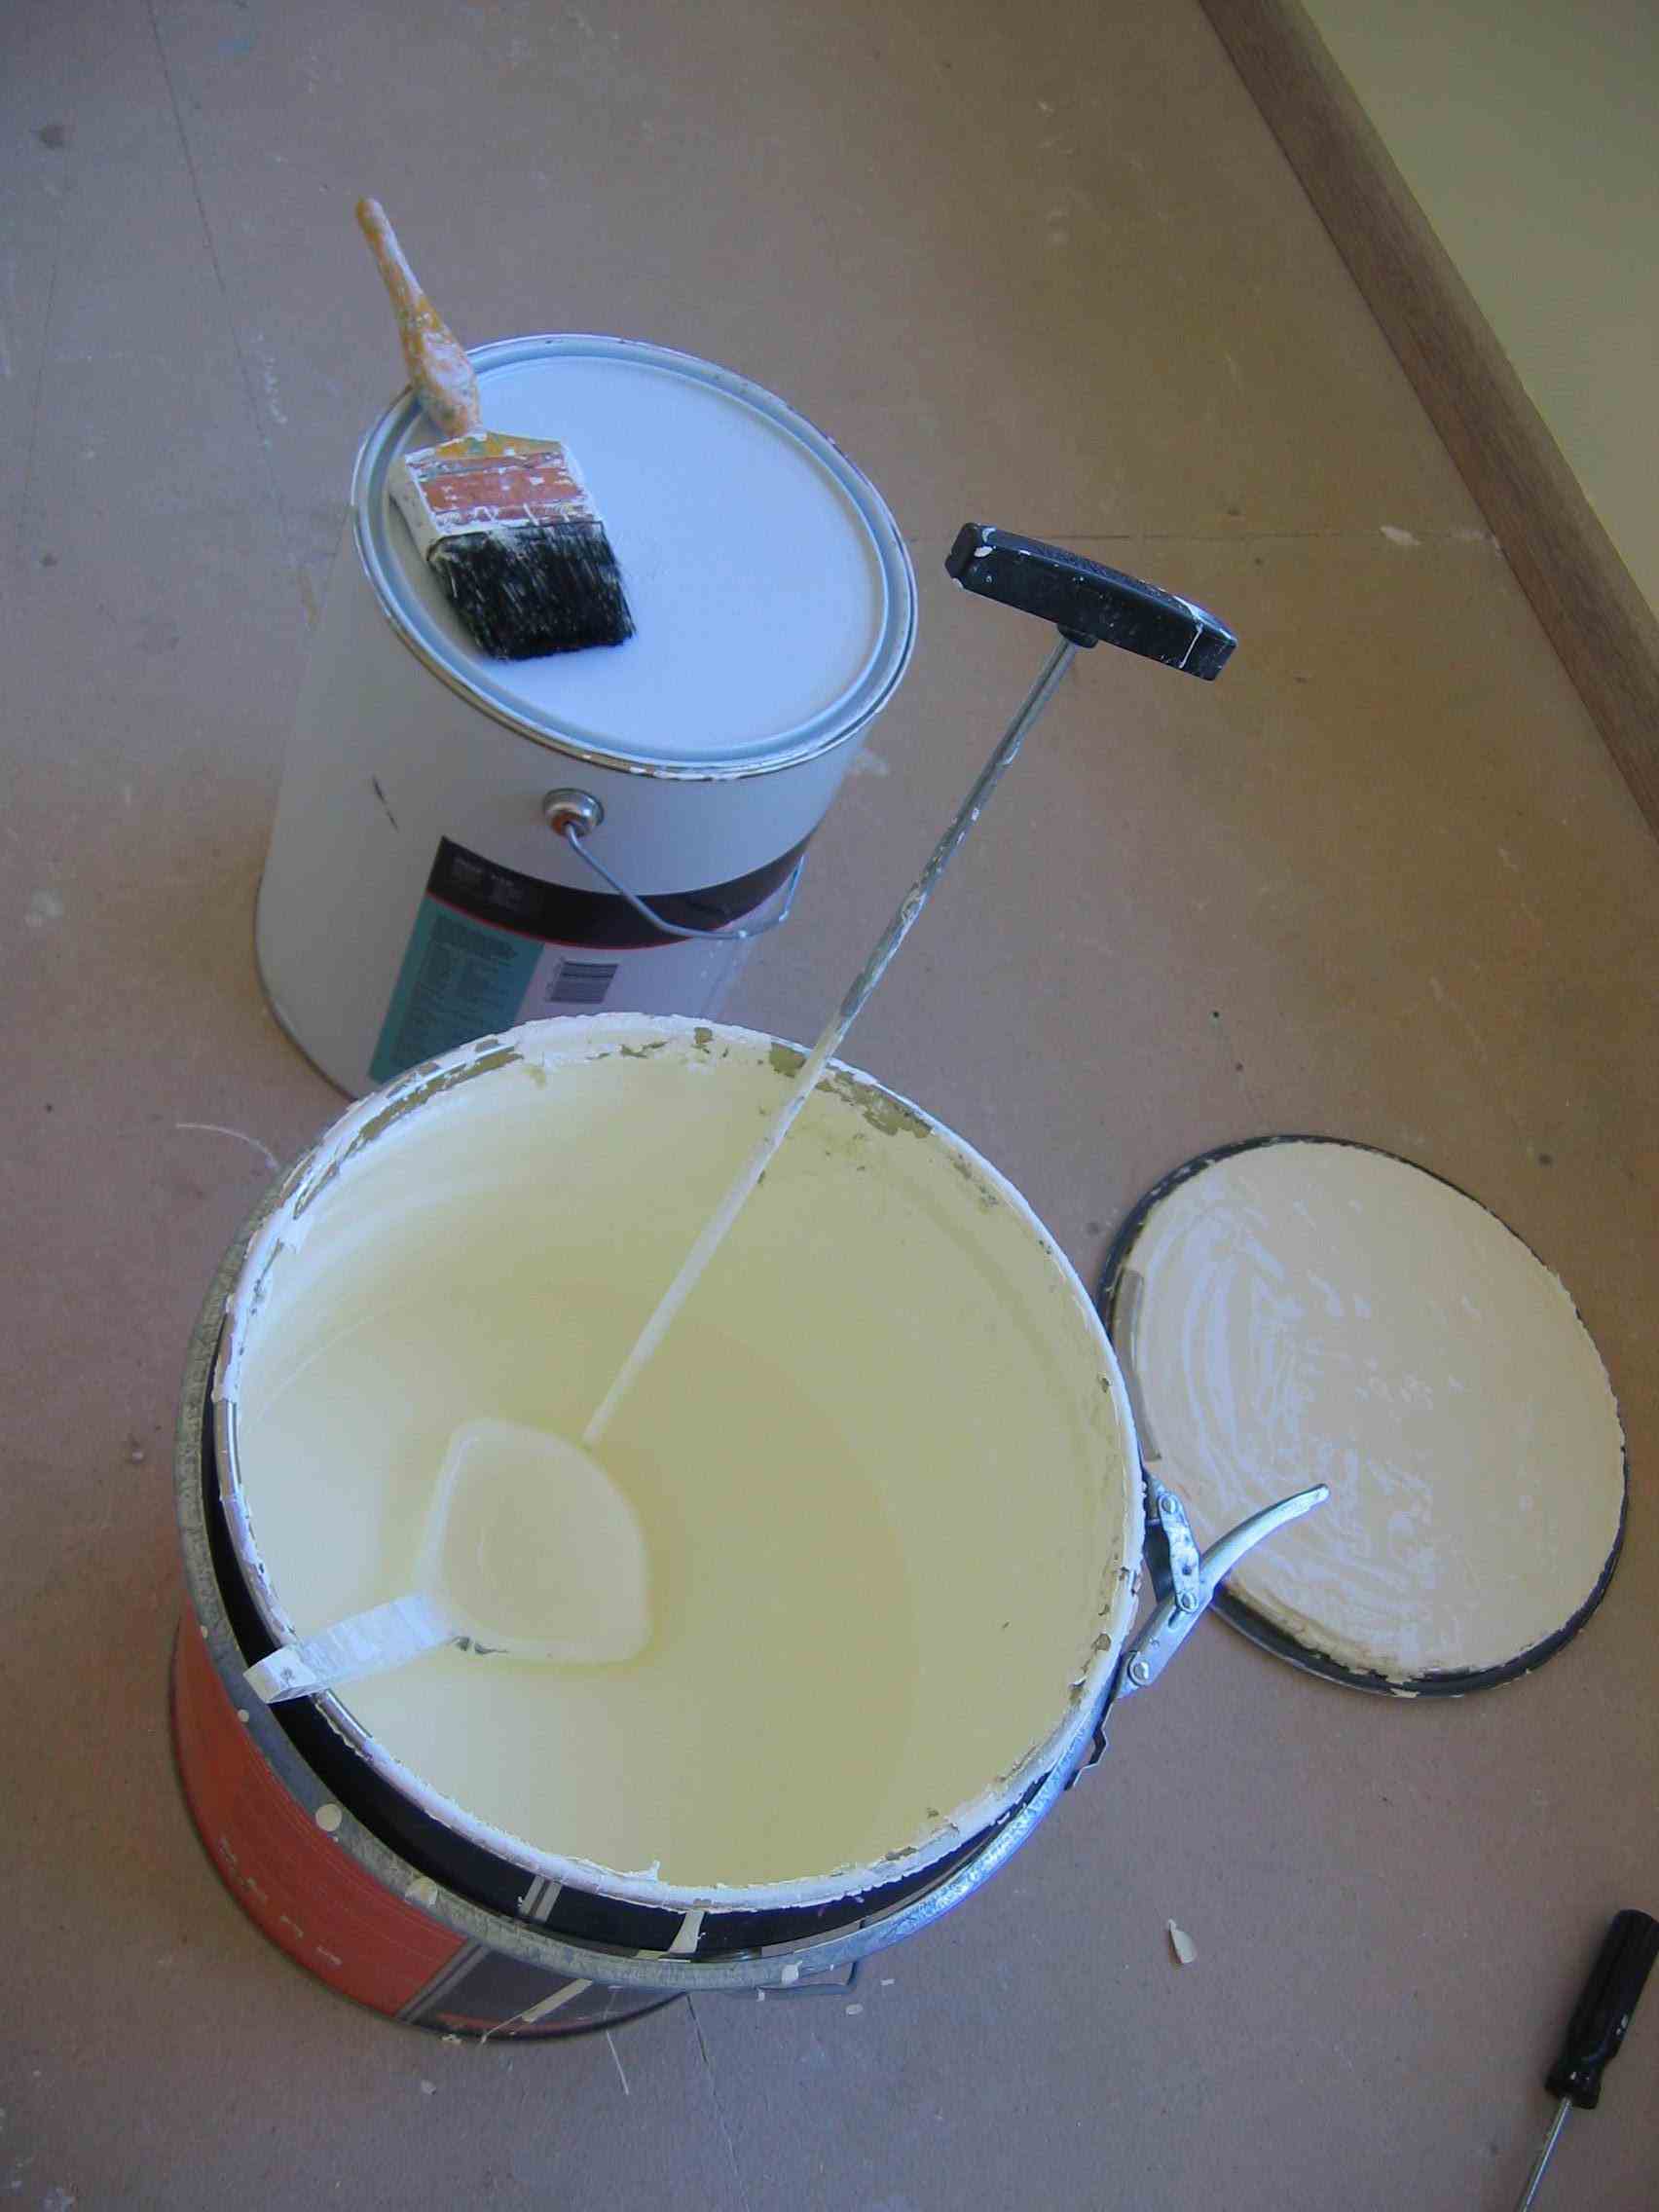 Solvent exposure is a hazard found in paint factories.